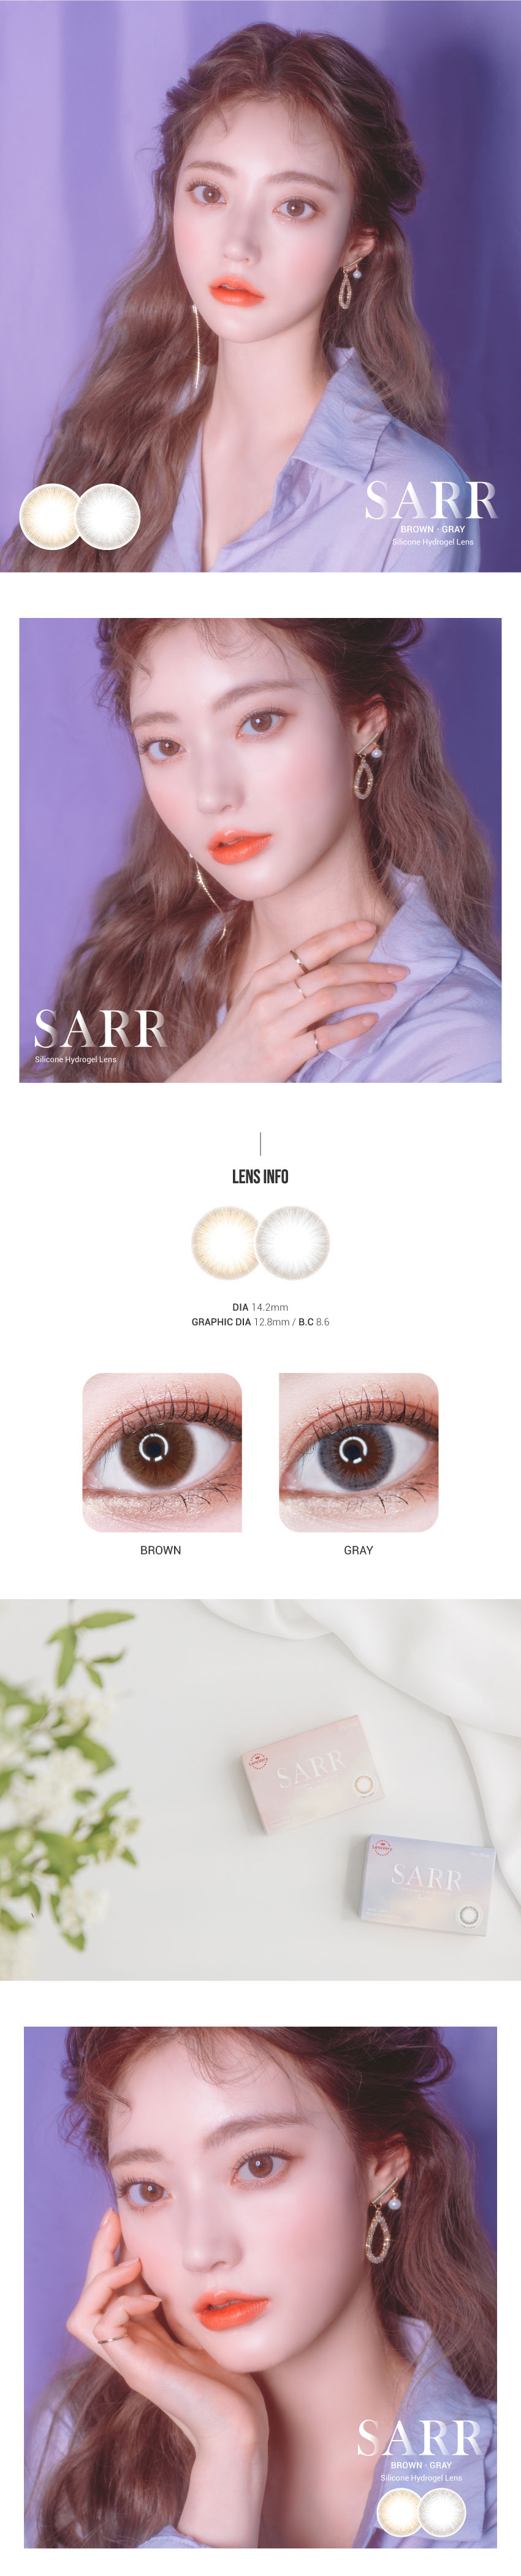 sarr-gray-brown-circle-lenses-1.jpg